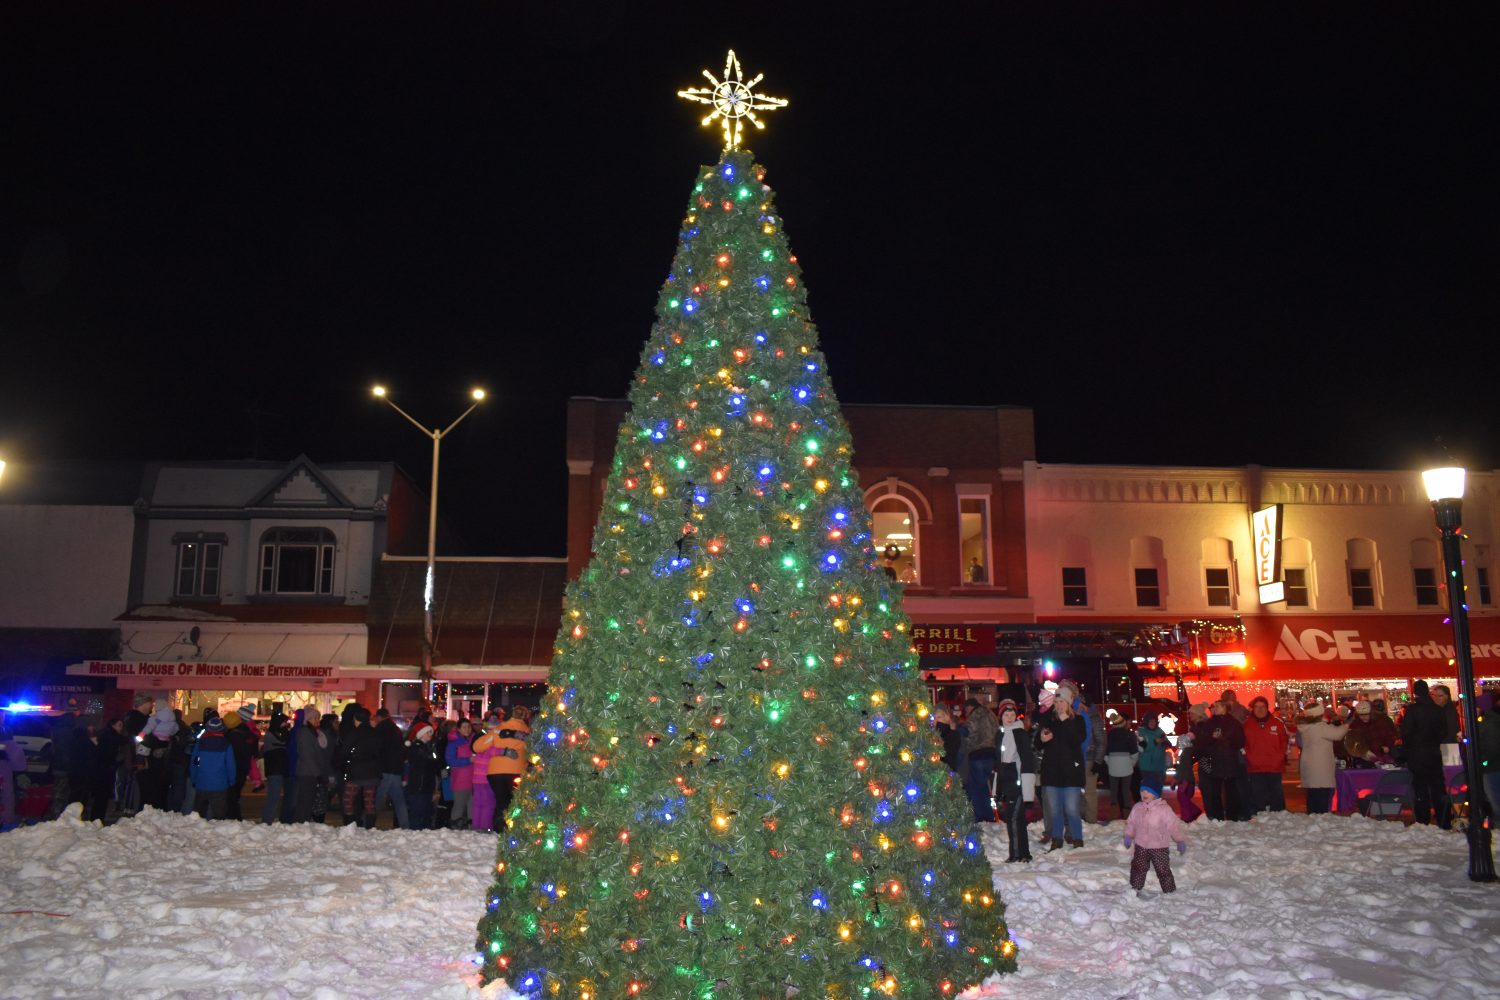 Merrill Chamber erects massive Christmas tree in Banker’s Square